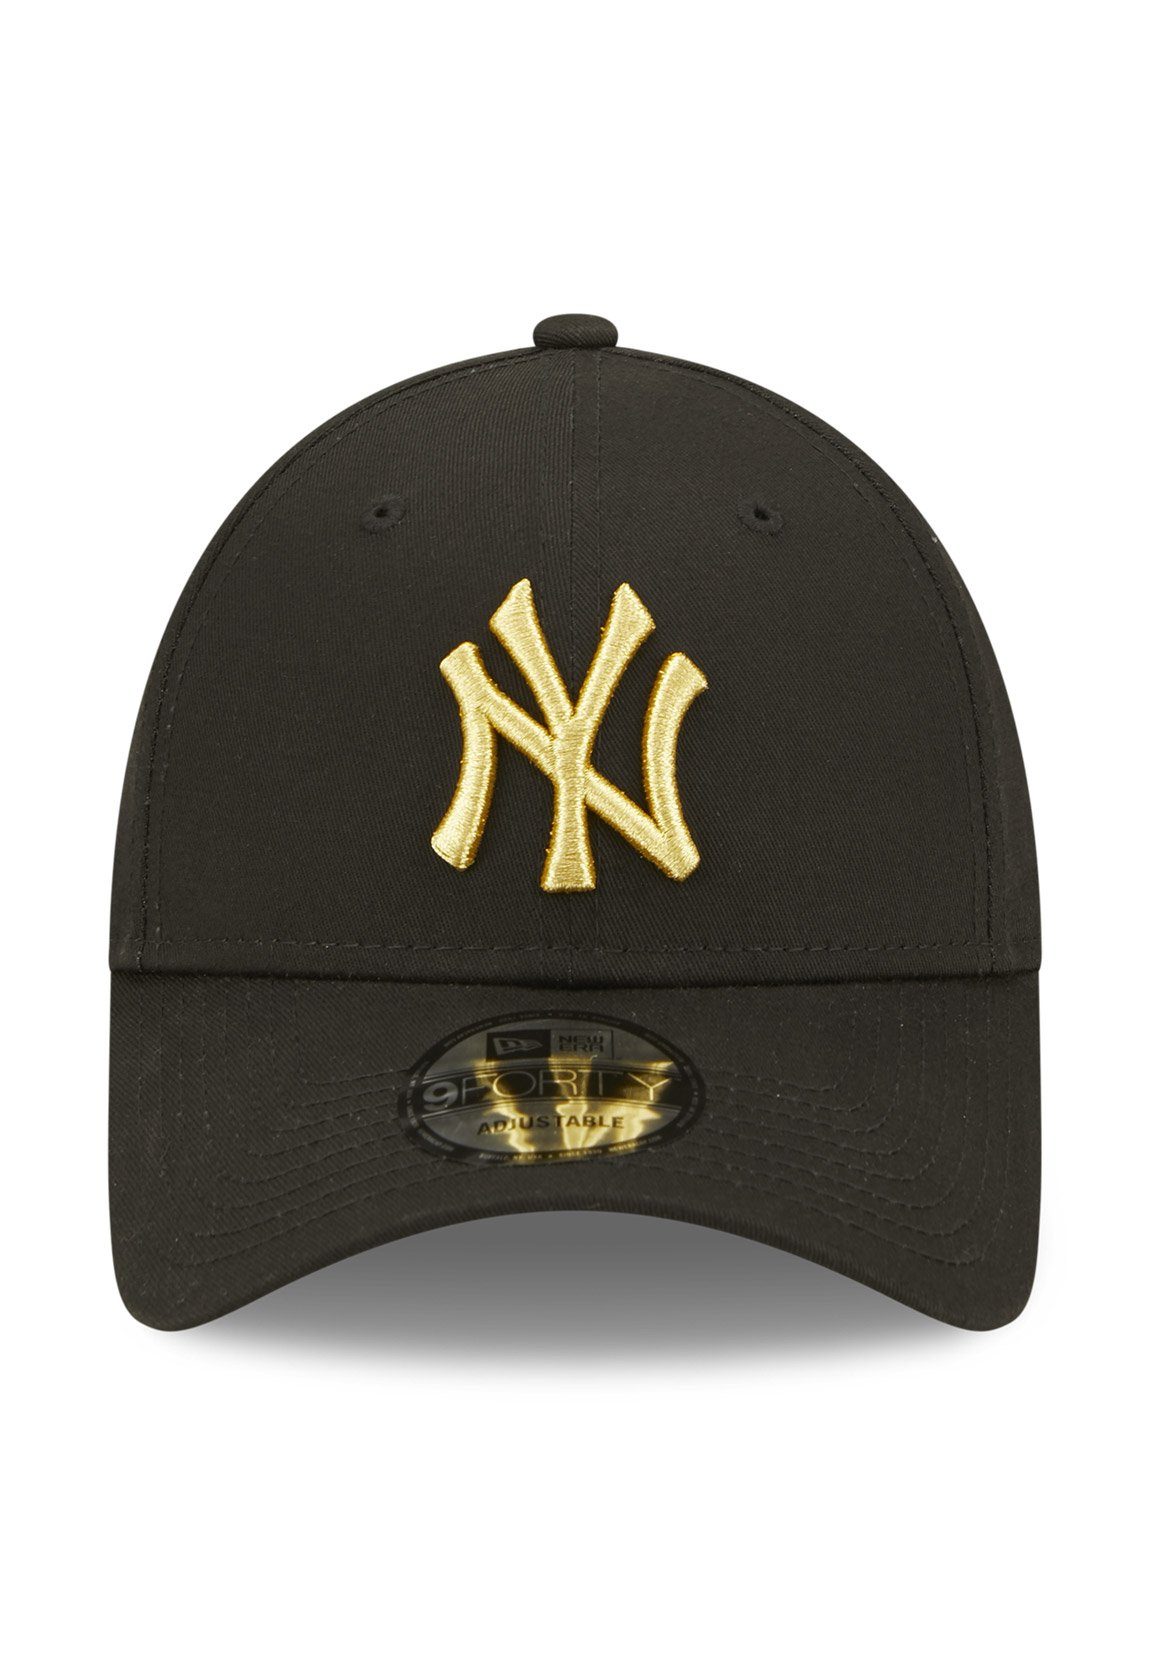 Baseball Cap Adjustable Era Era YANKEES New Schwarz Metallic New Cap Gold 9Forty NY